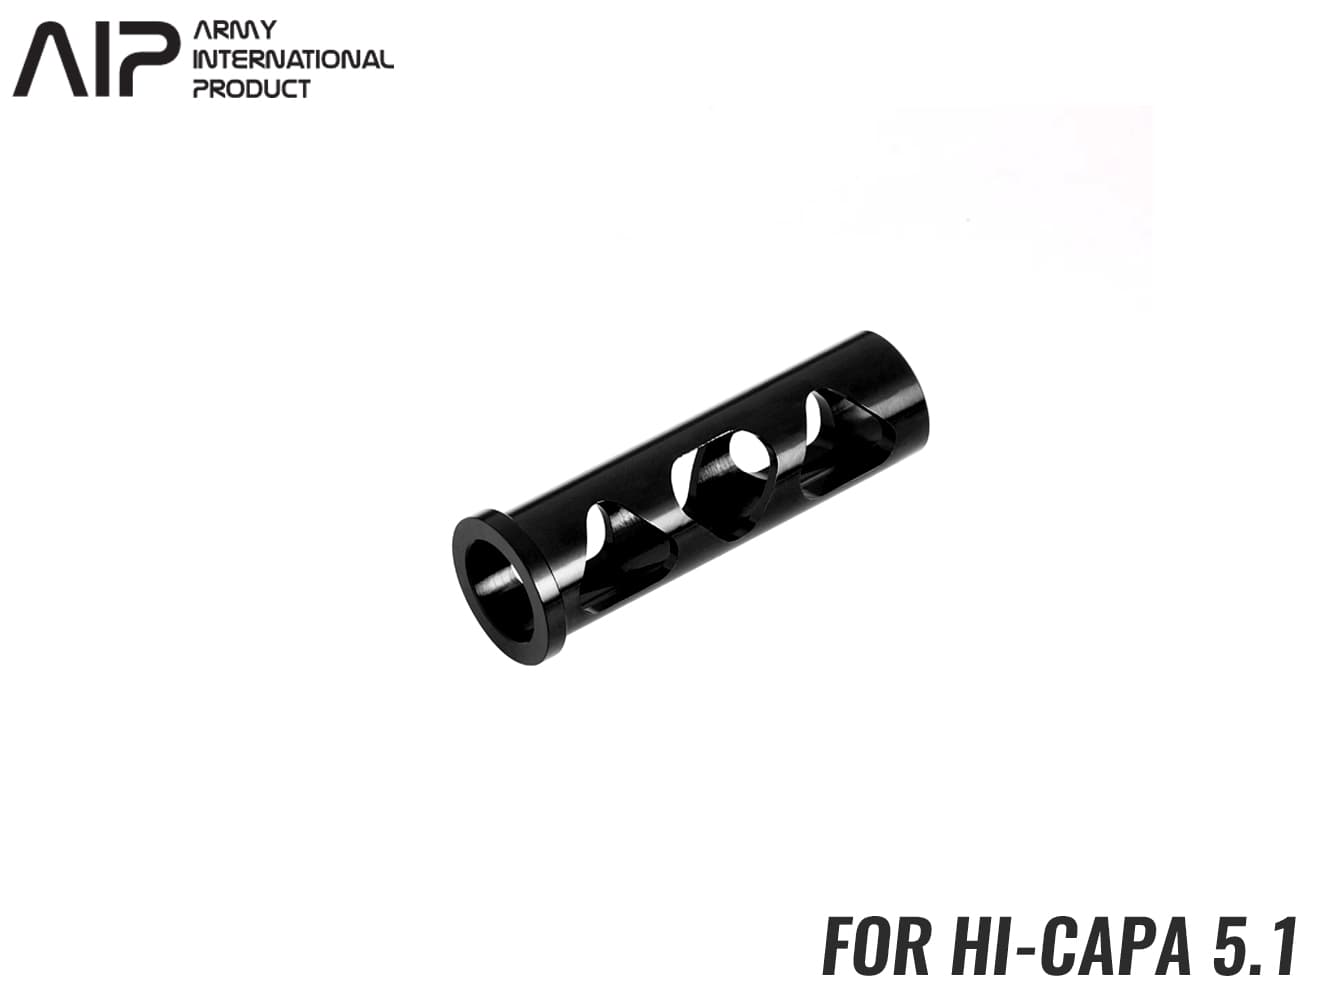 AIP ライトウェイト リコイルプラグ Hi-CAPA 5.1◆BK 東京マルイ ガスブロ ハイキャパ 5.1シリーズ対応 軽量 肉抜きデザイン メタルスライド化に